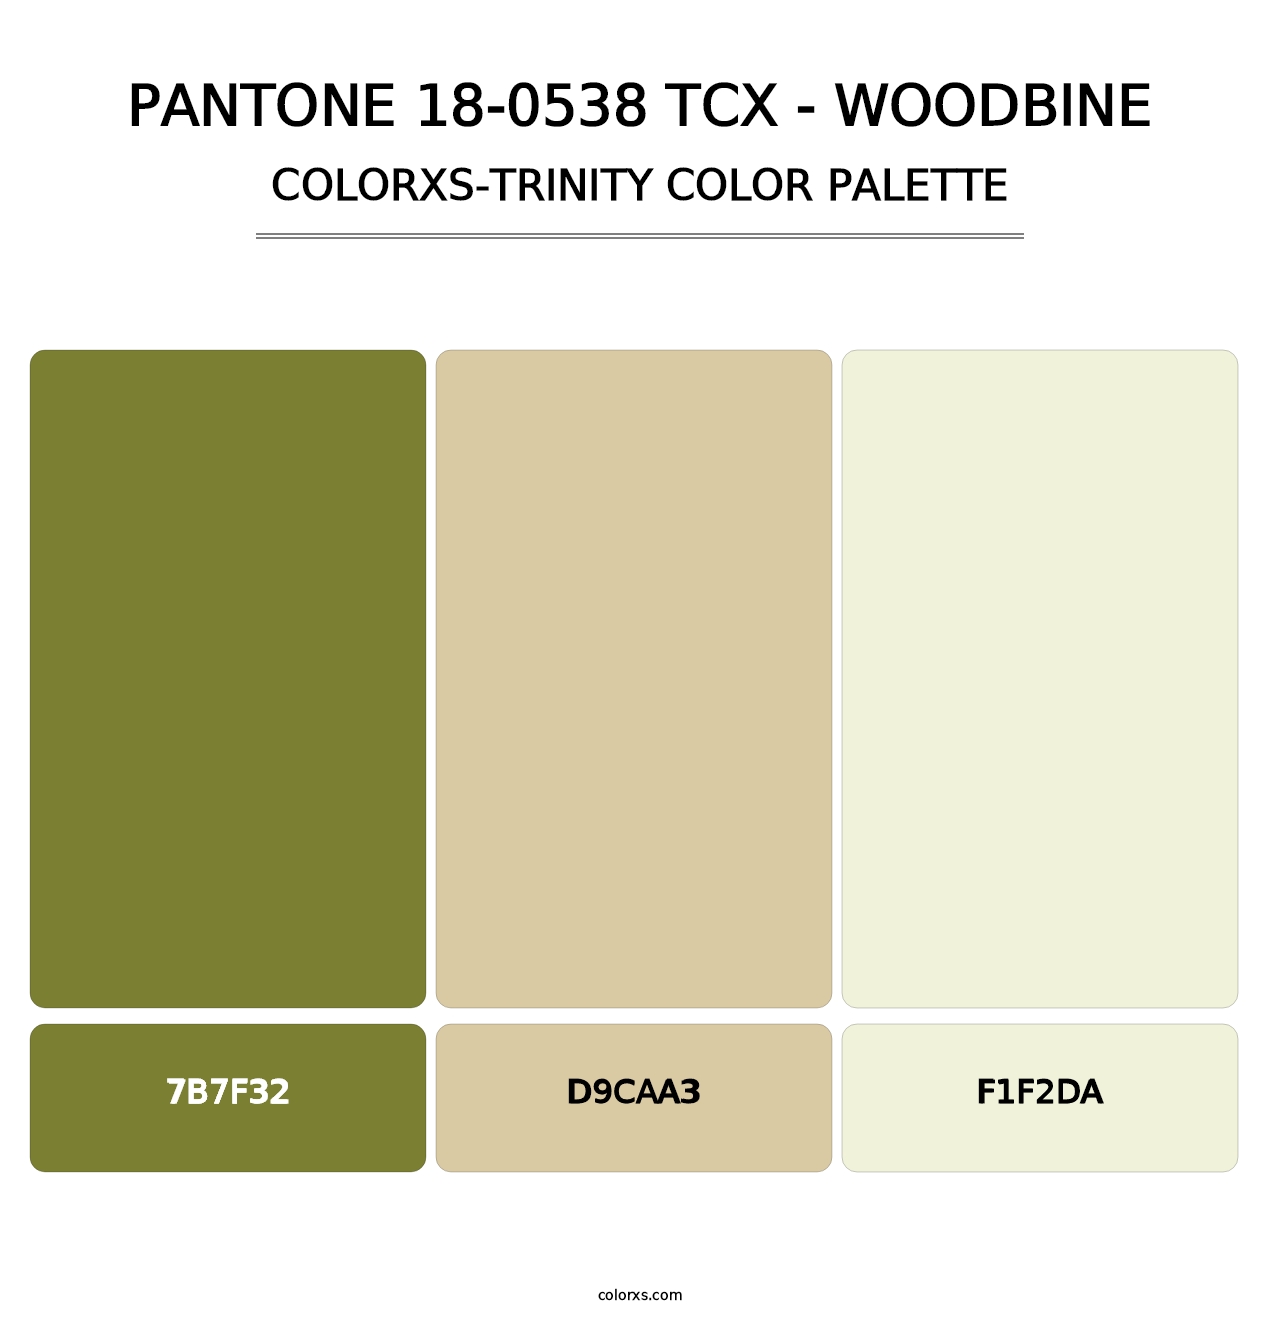 PANTONE 18-0538 TCX - Woodbine - Colorxs Trinity Palette